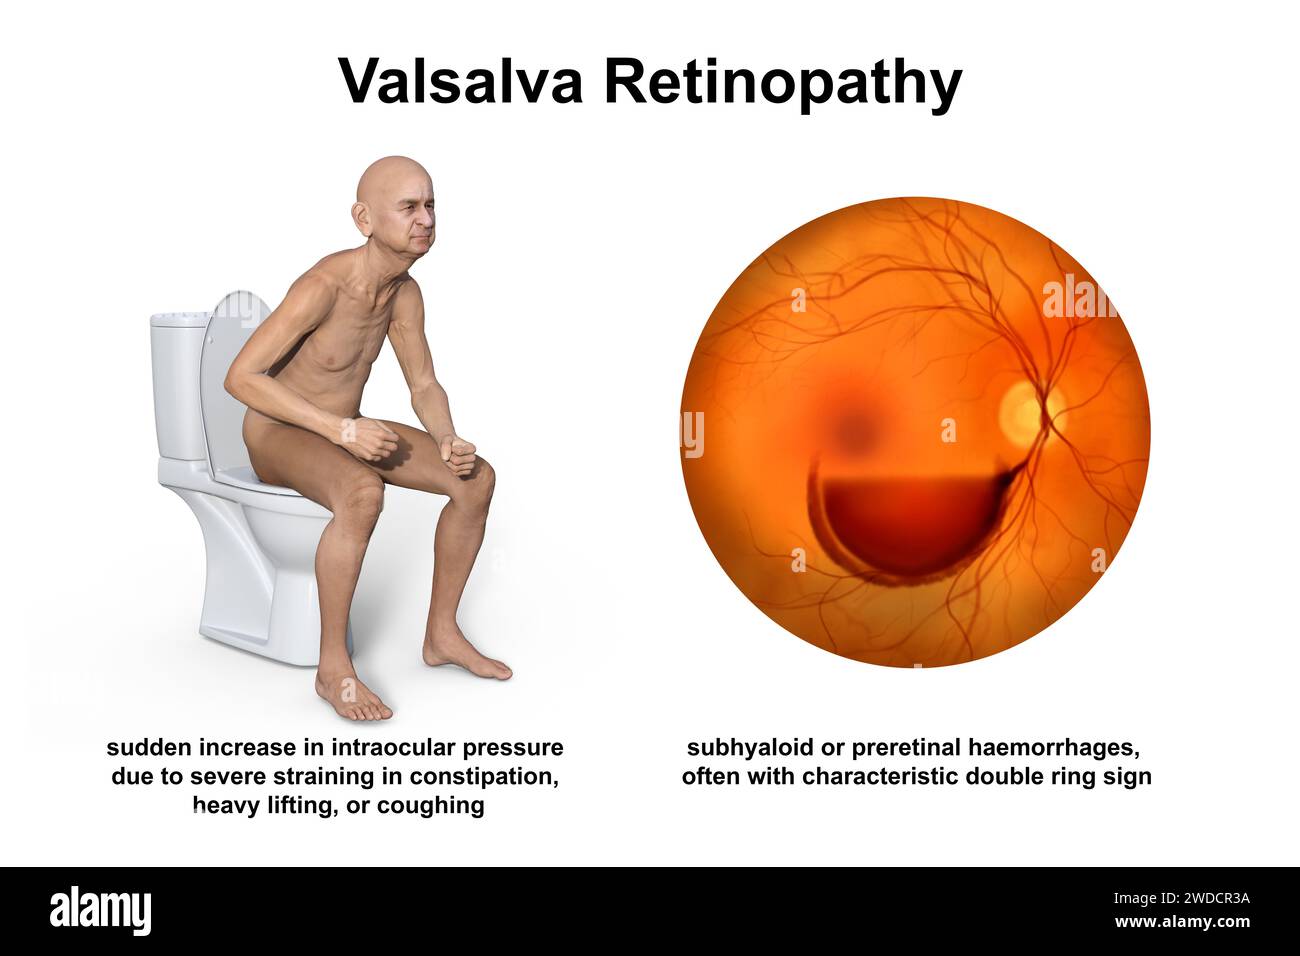 Valsava retinopathy, illustration Stock Photo